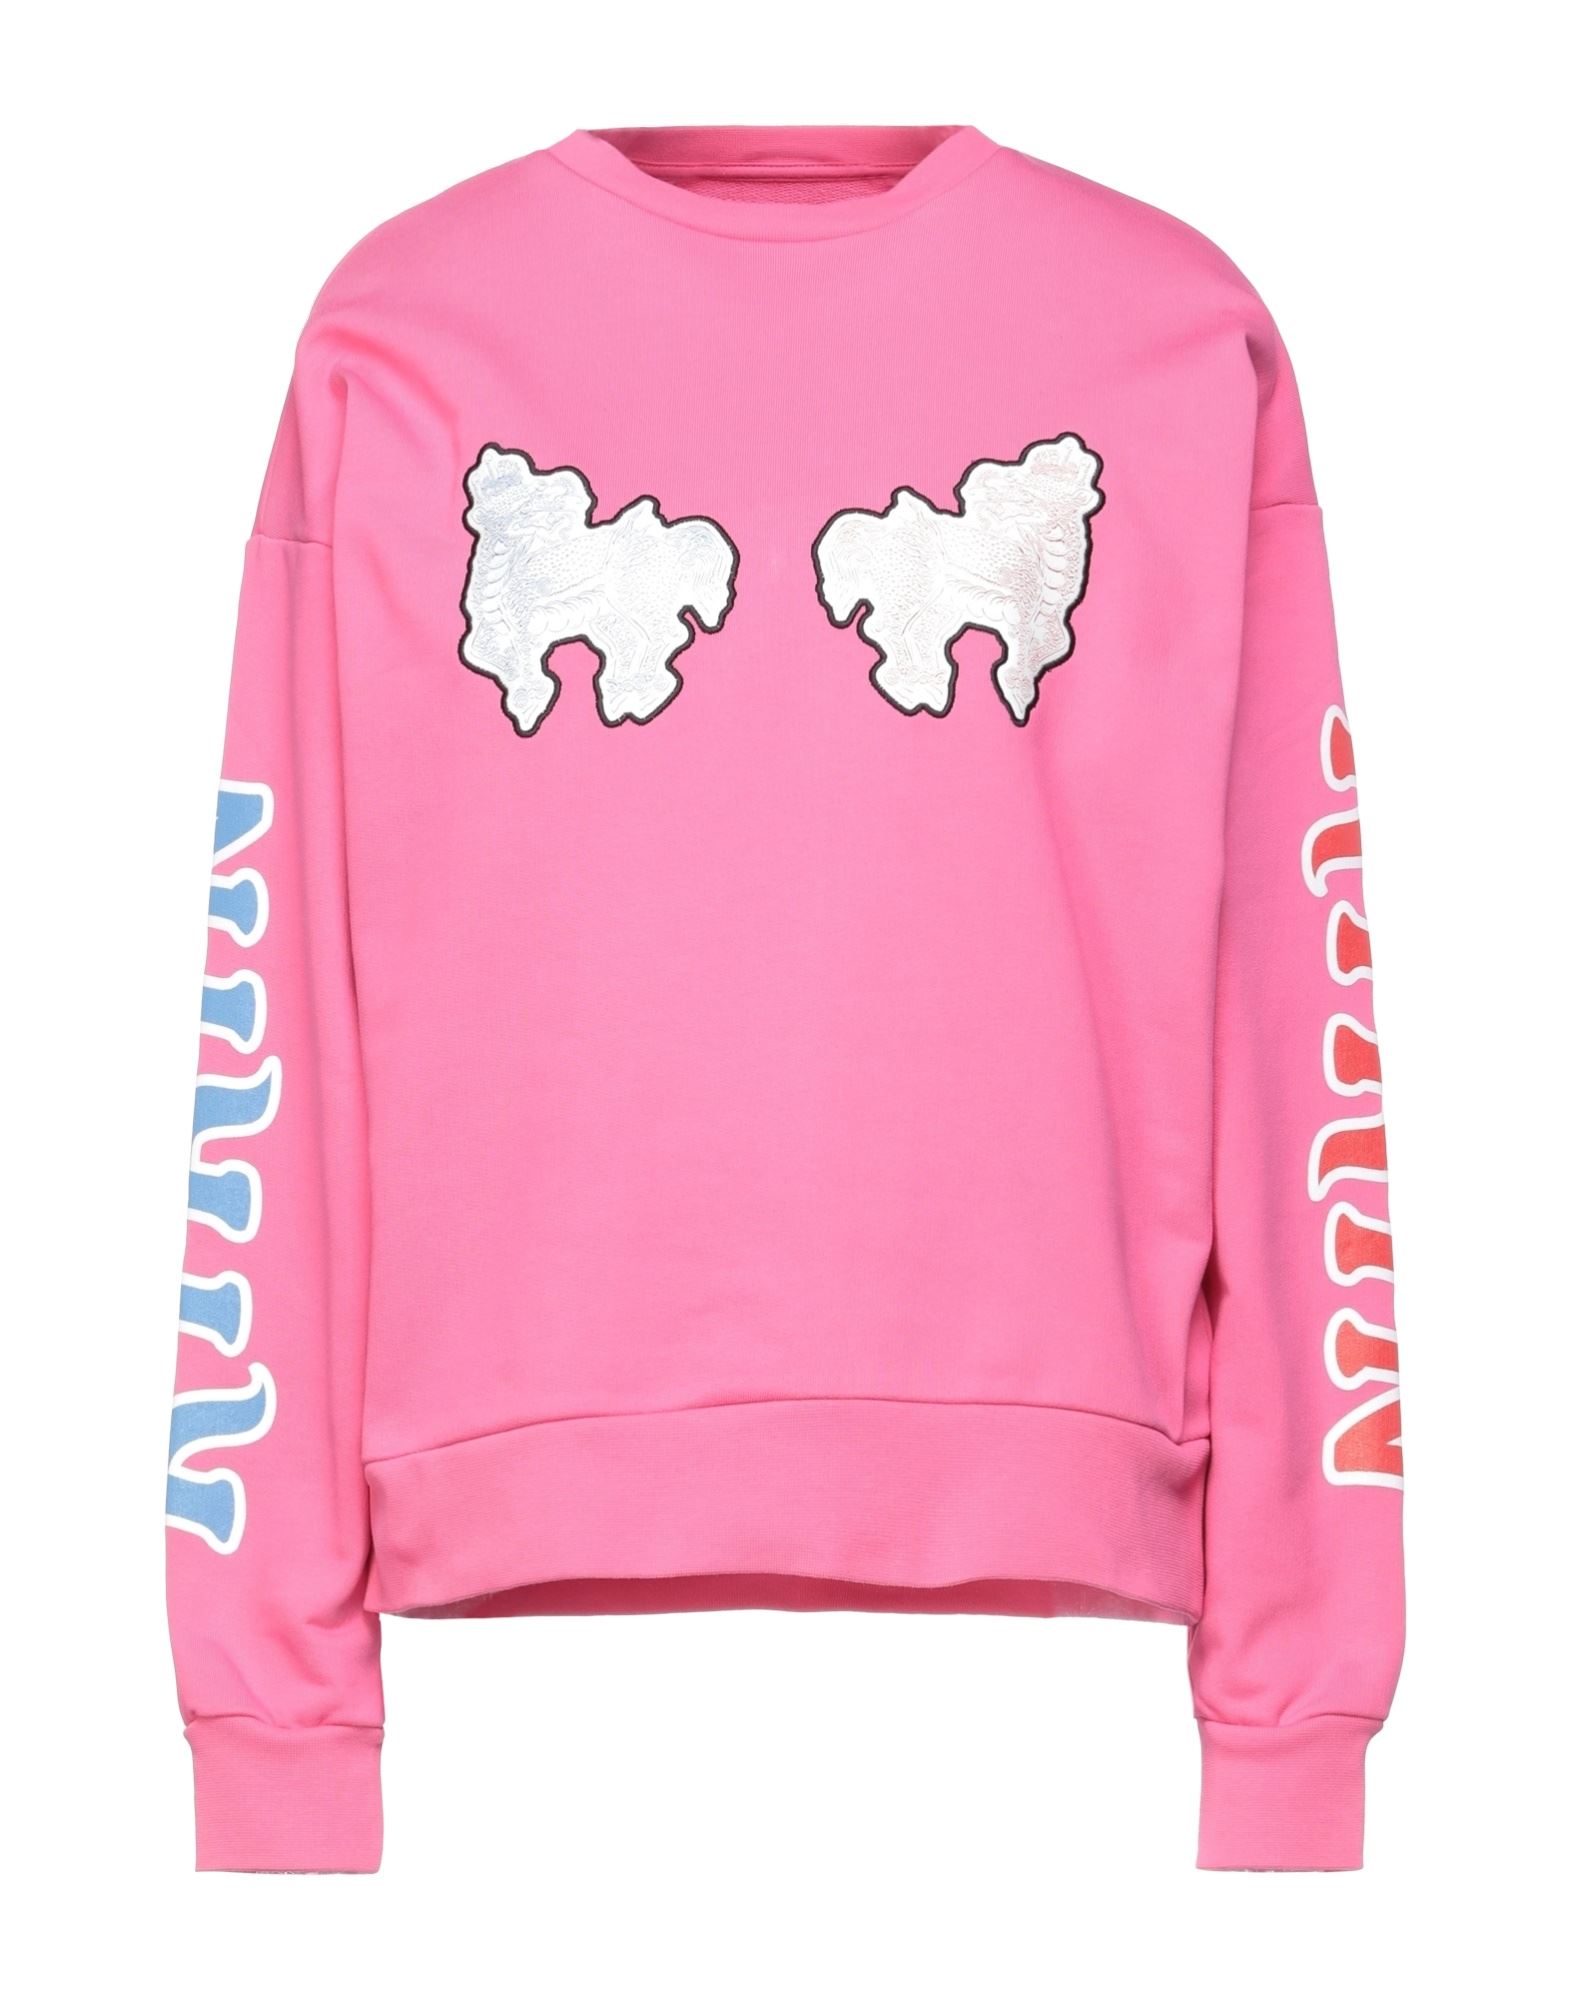 Kirin Peggy Gou Sweatshirts In Pink